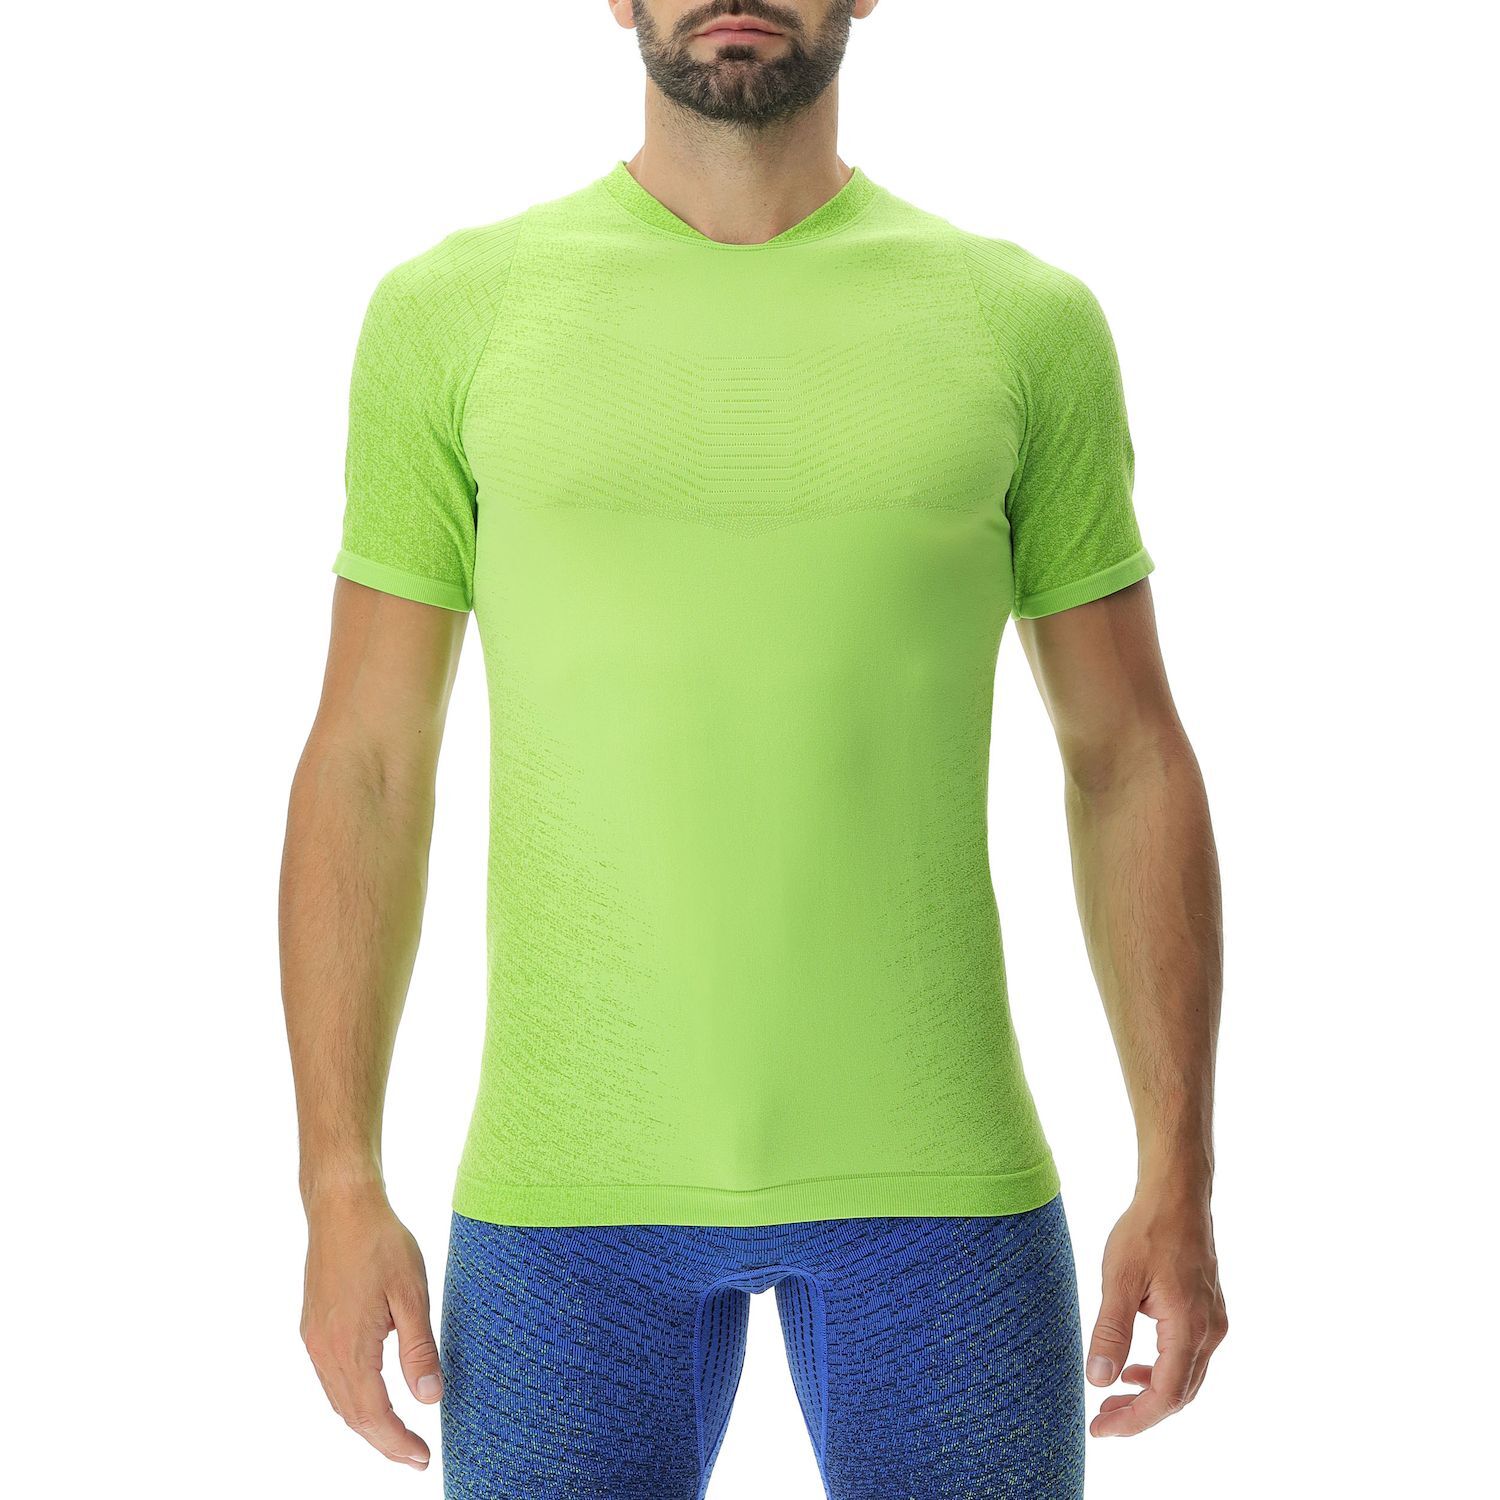 Uyn Running Exceleration Ow Shirt - Camiseta - Hombre